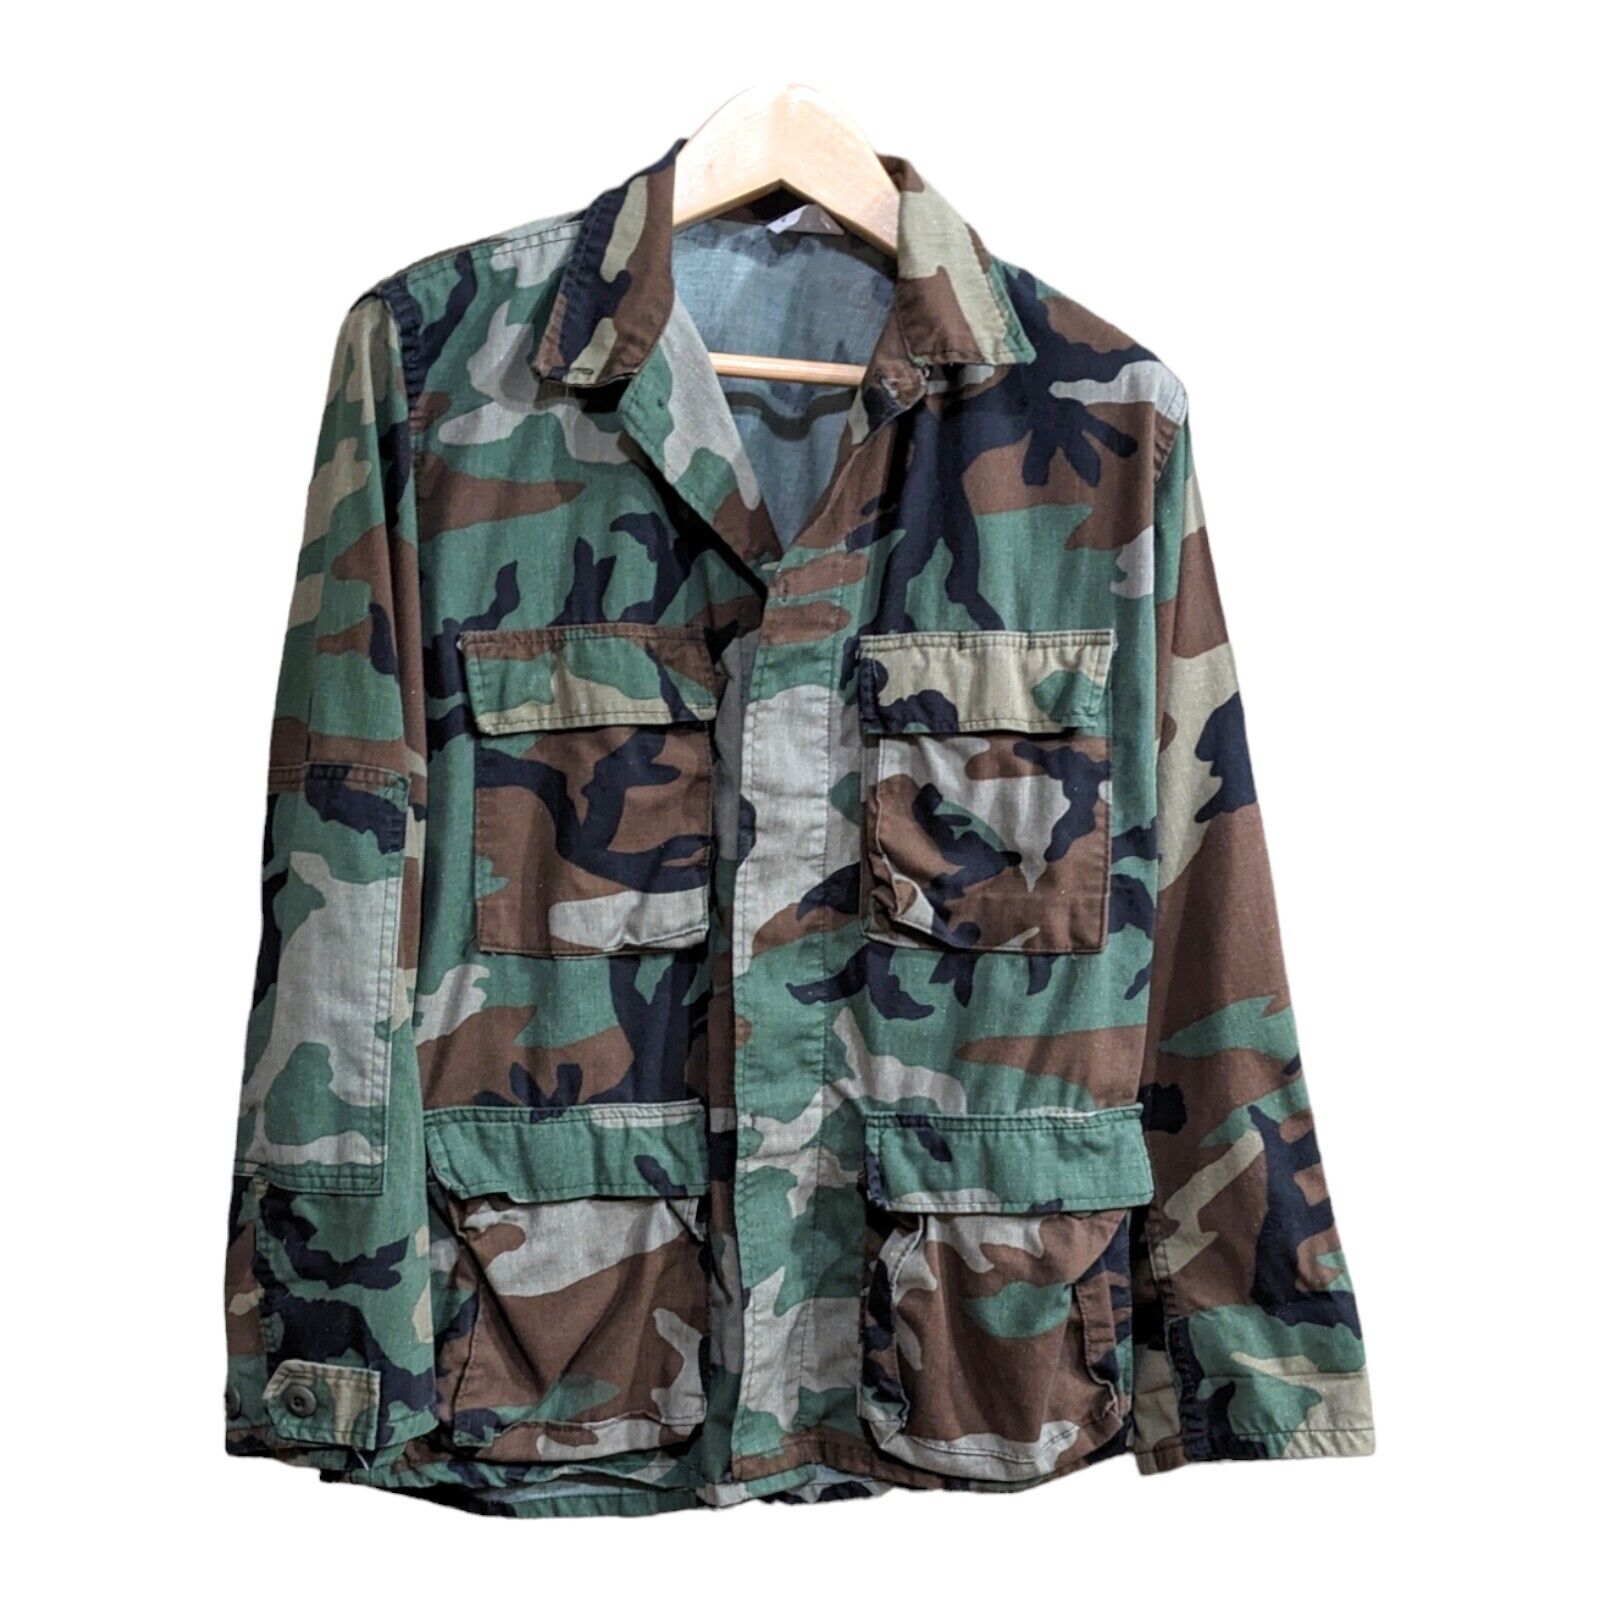 Vintage USGI Military Jacket Woodland M81 Camo BDU Shirt NATO Size Small